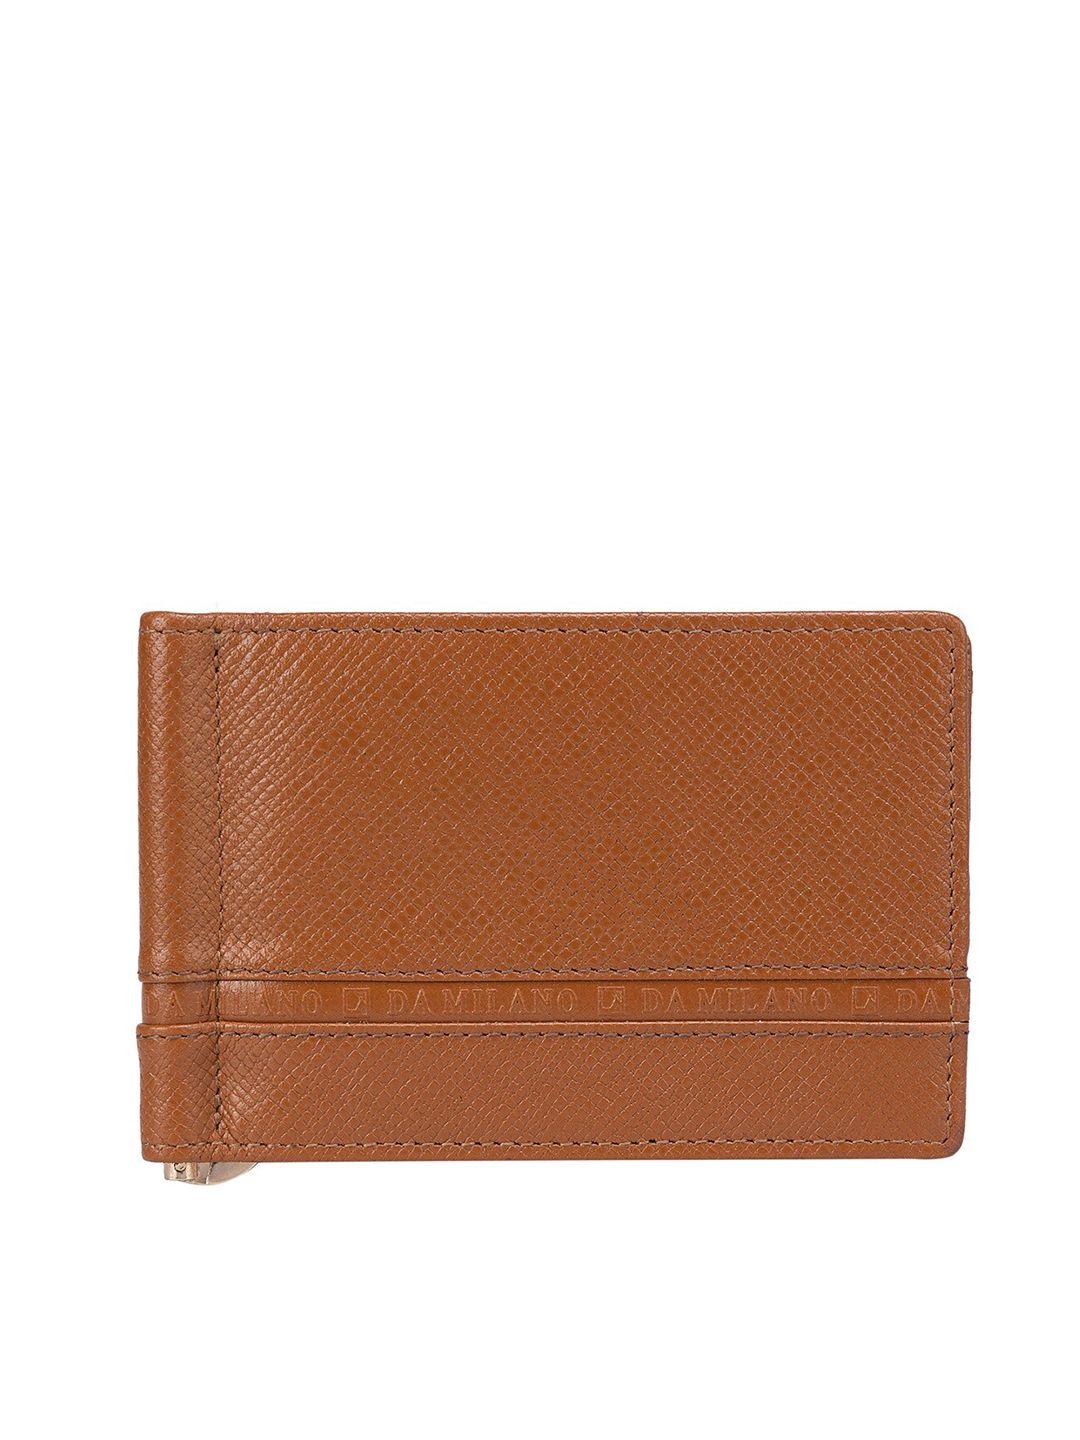 da milano men leather two fold wallet